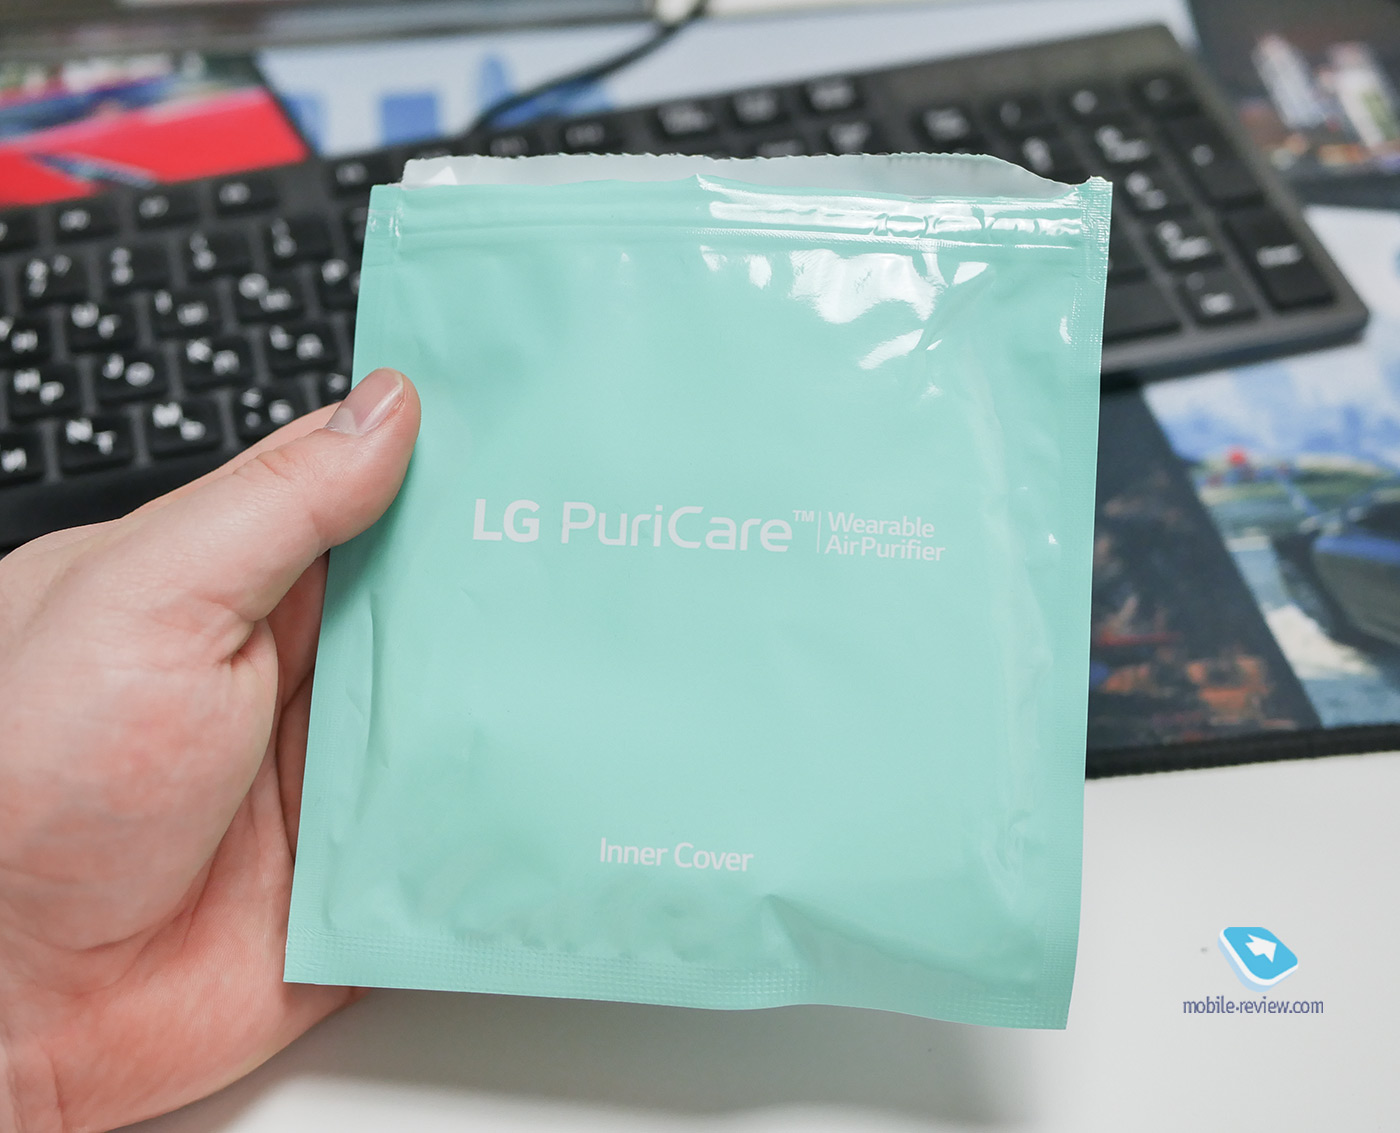   LG PuriCare Wearable Air Purifier       ?